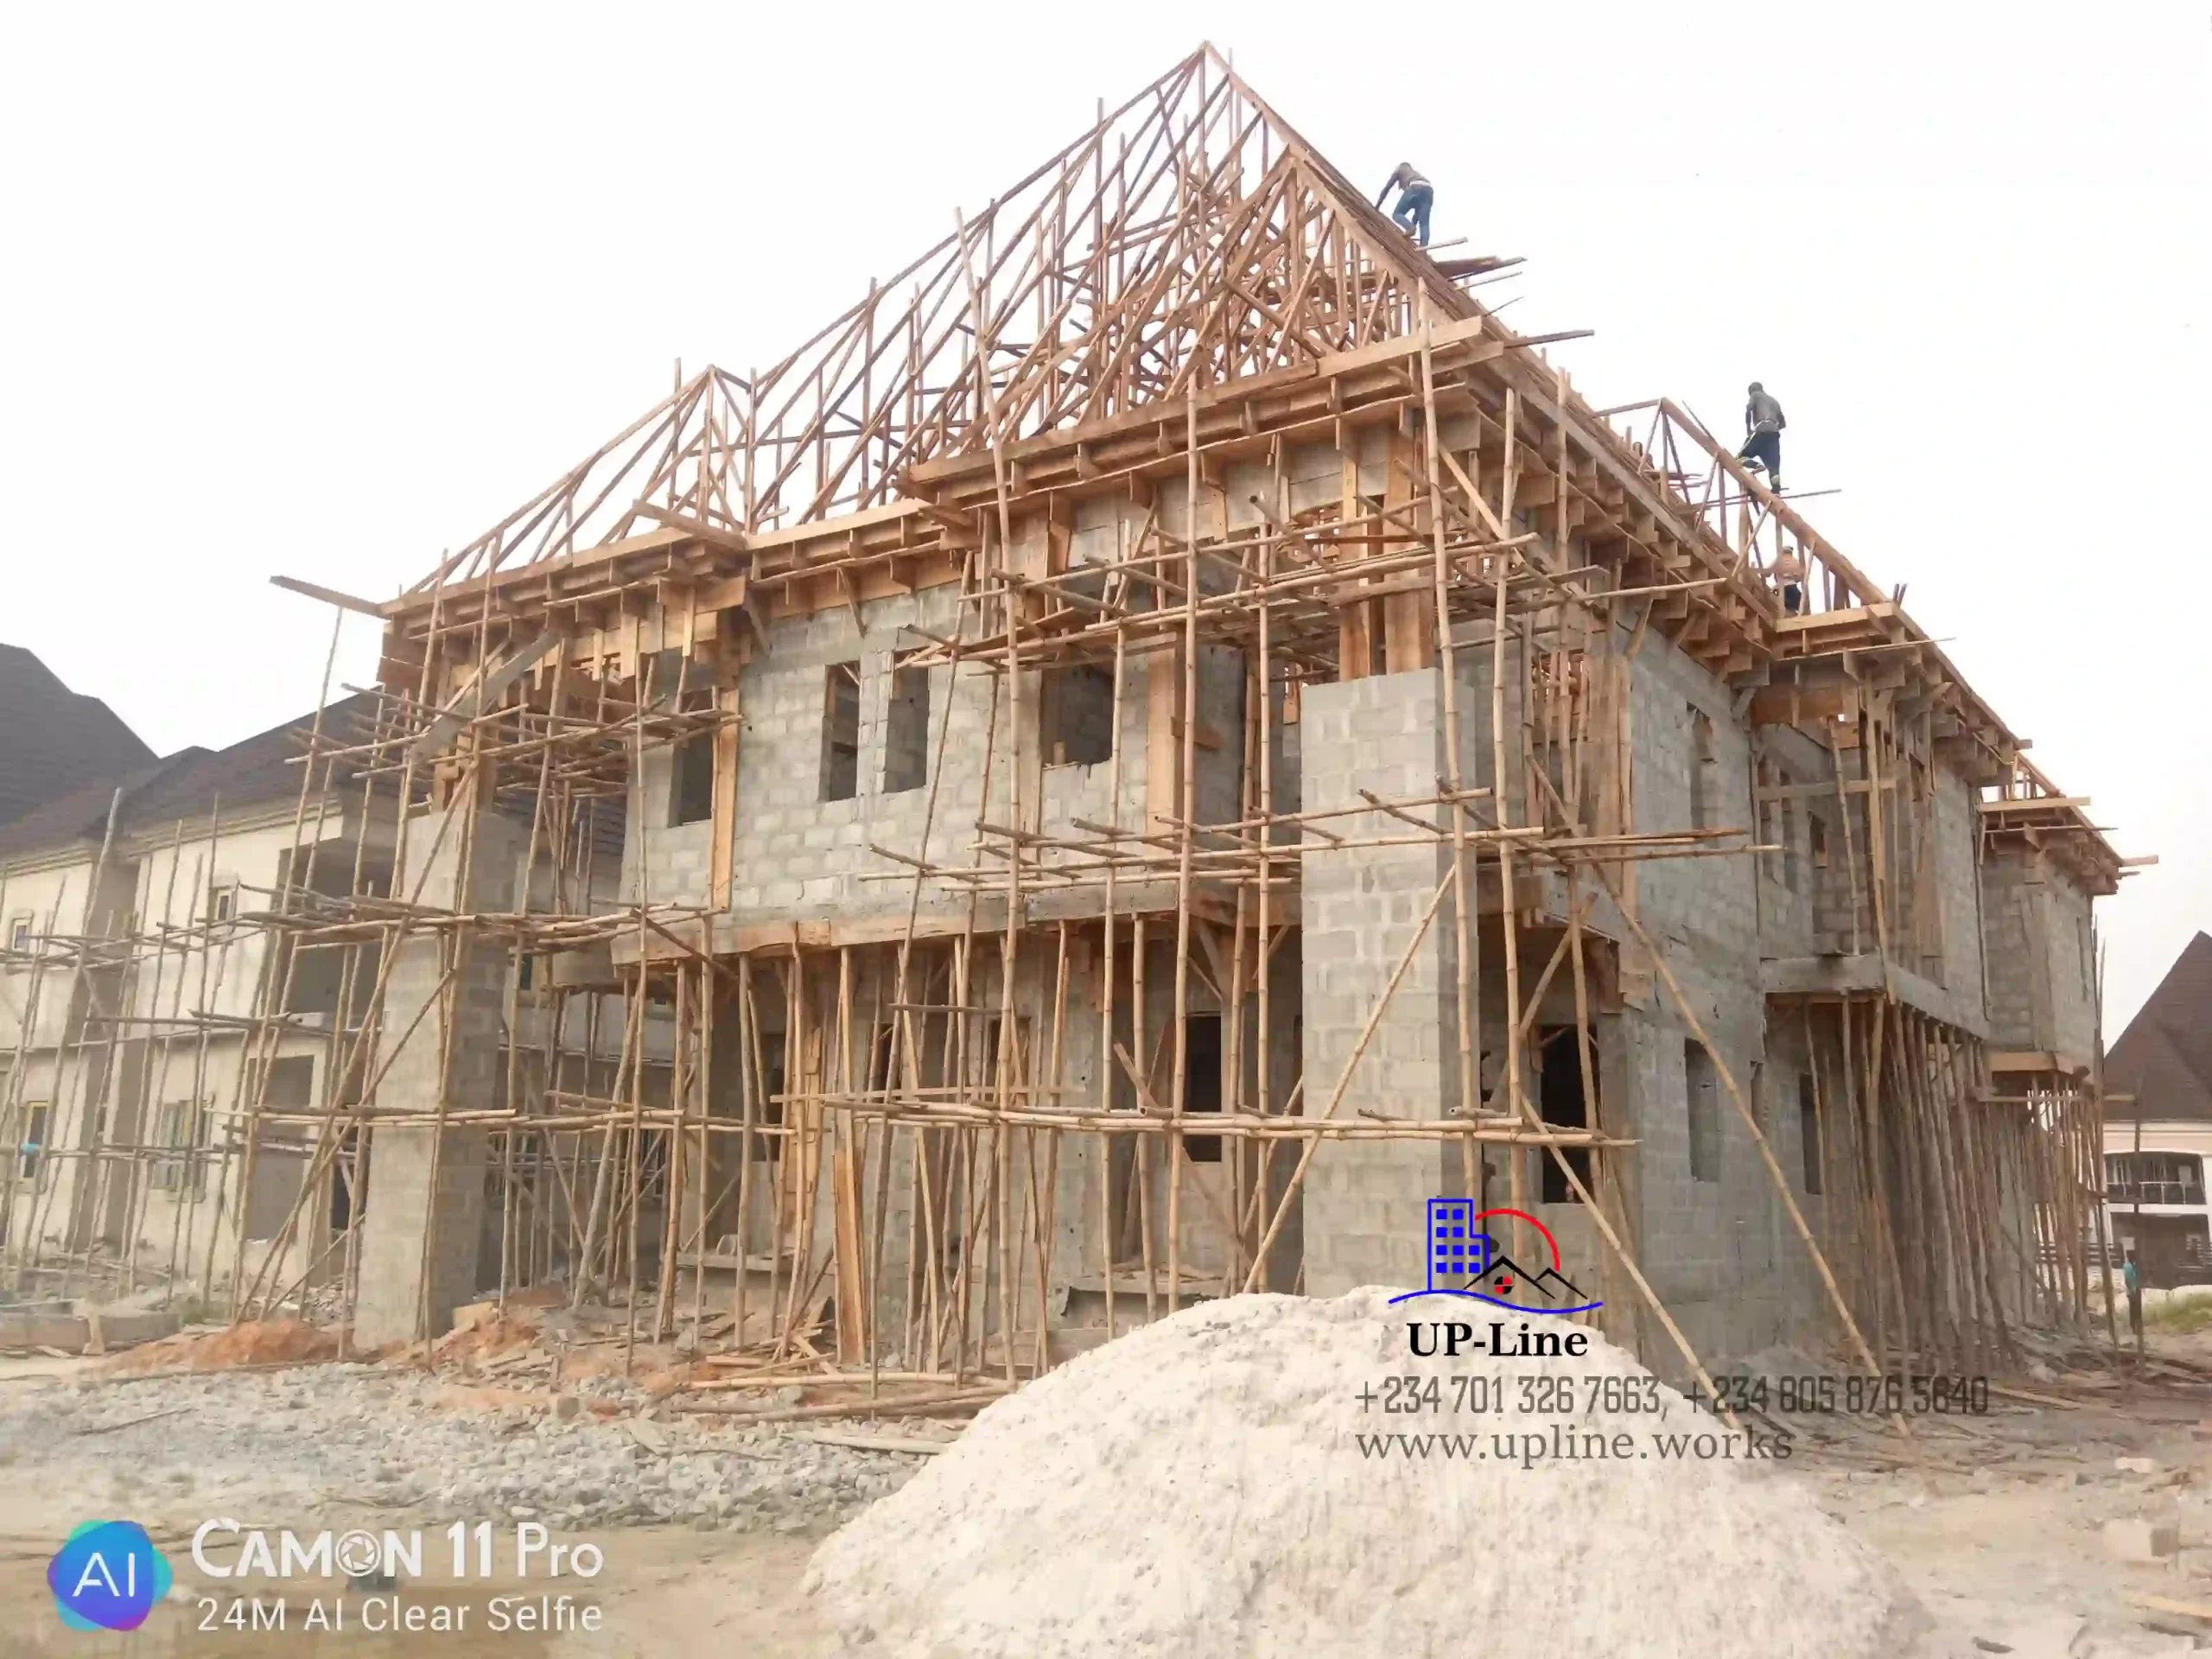 3 Bedroom duplex house plans in Nigeria